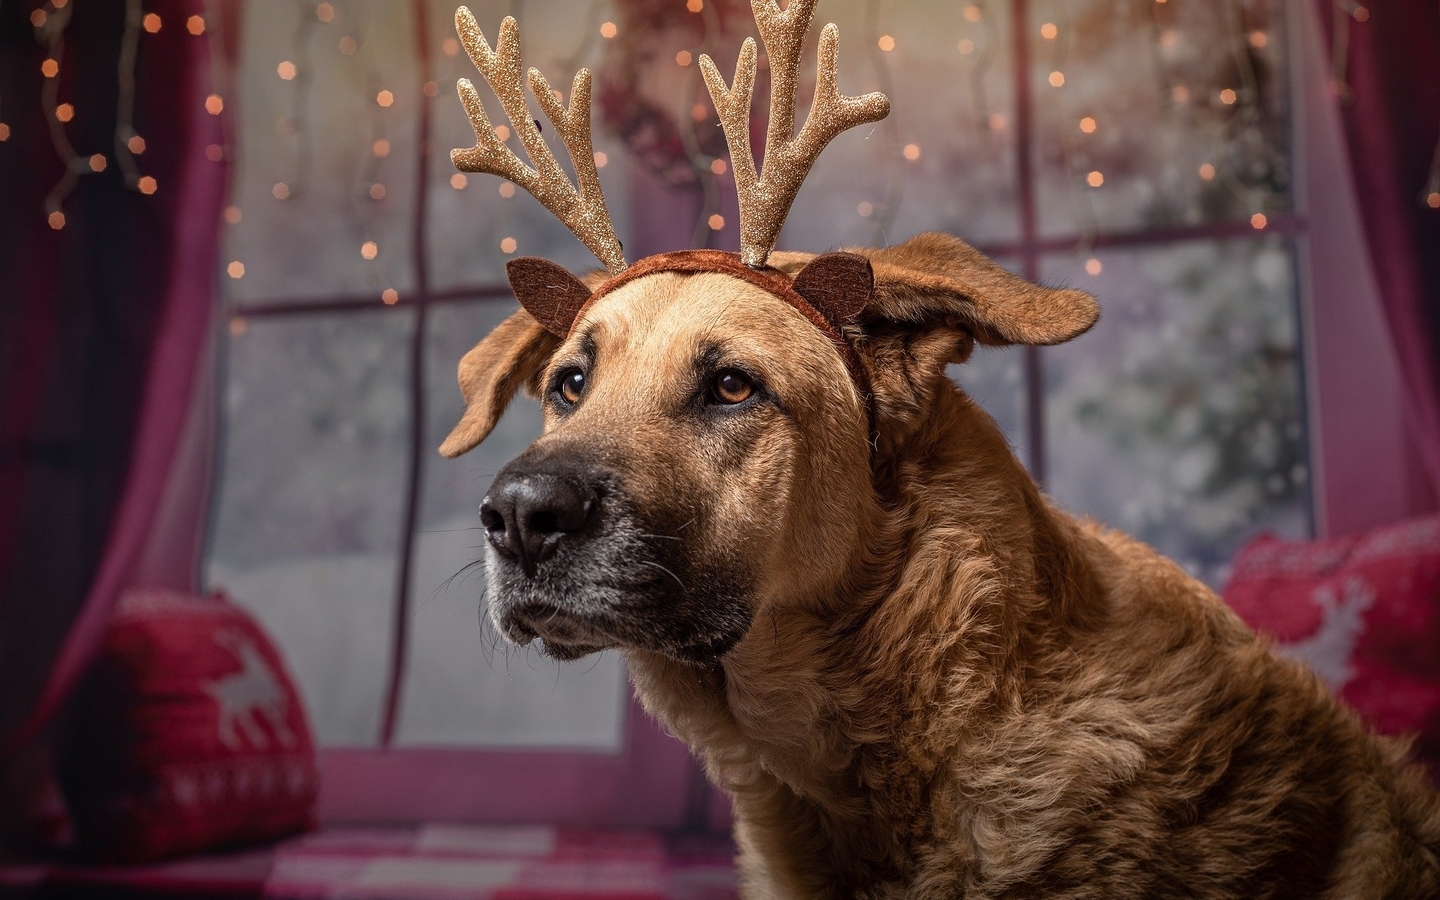 Image: Dog, costume, deer antlers, holiday, lights, window